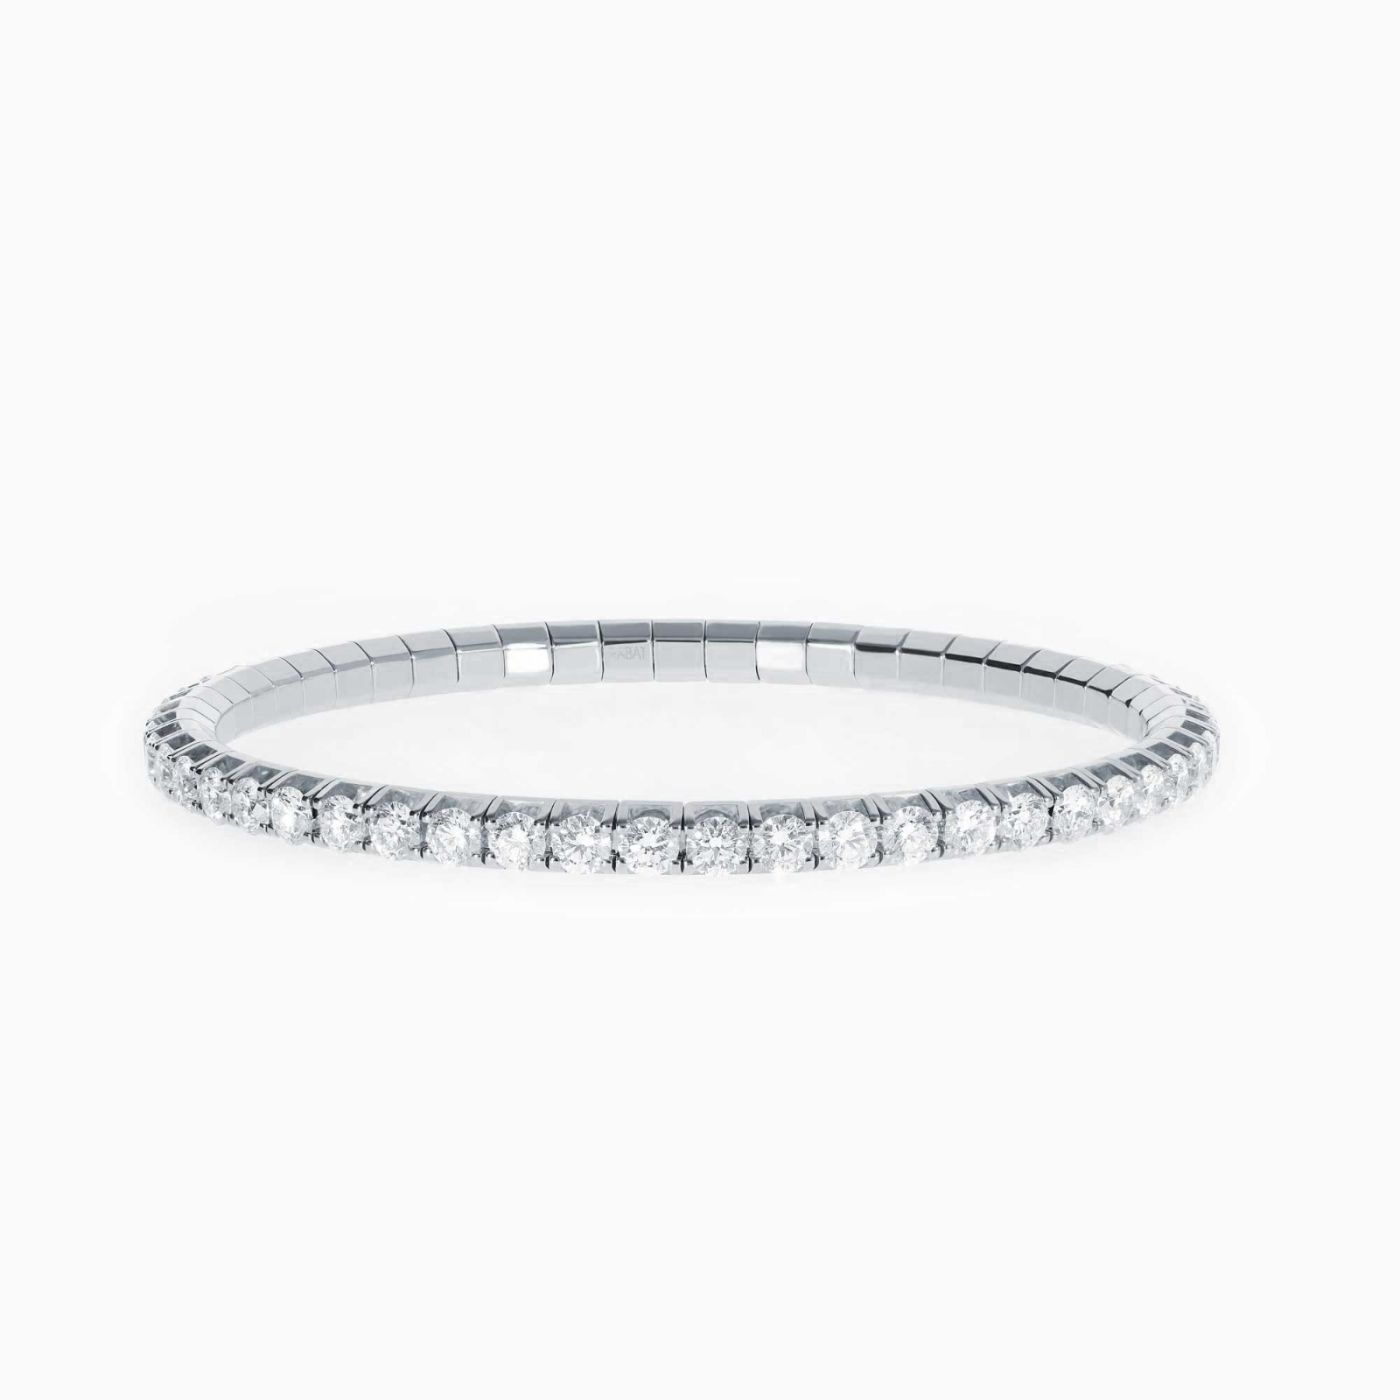 White gold riviere bracelet with brilliant-cut white diamonds